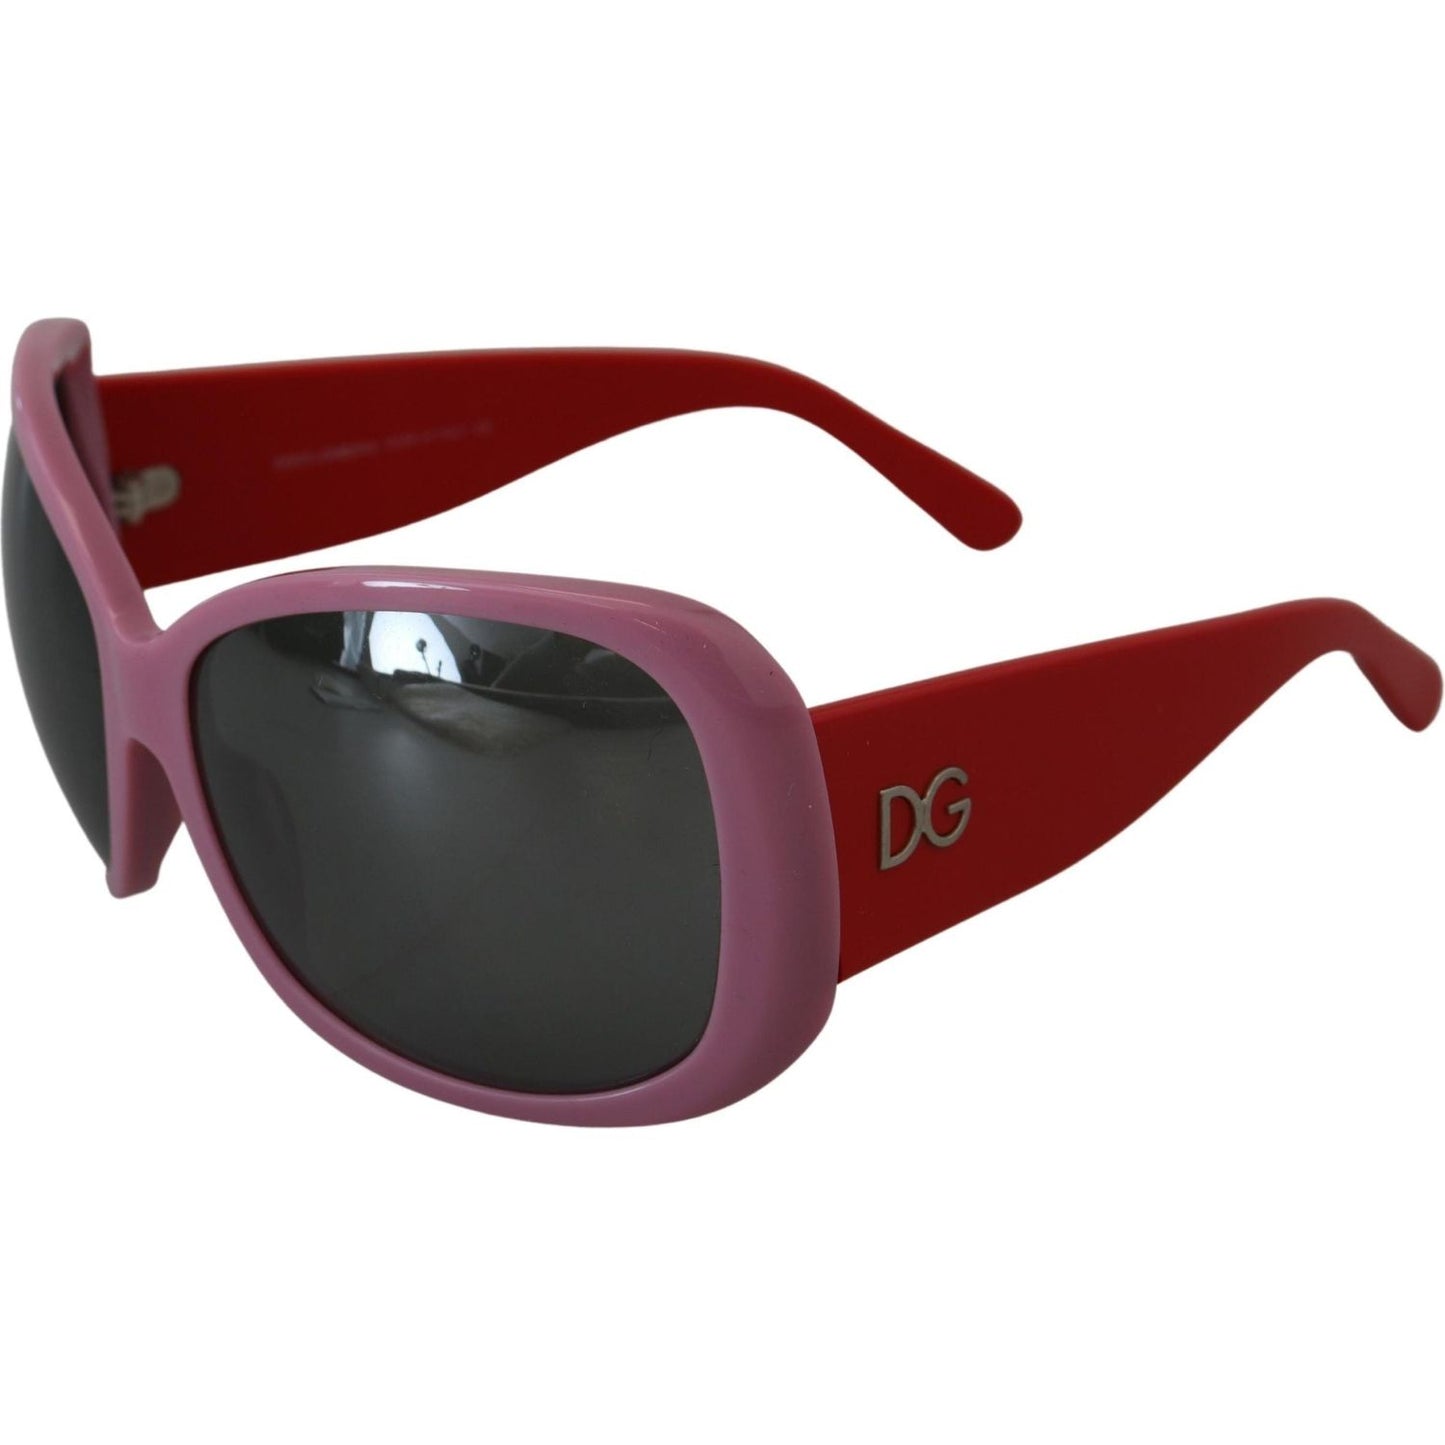 Dolce & Gabbana Chic Oversized UV-Protection Sunglasses pink-red-plastic-frame-oversized-dg4033-sunglasses